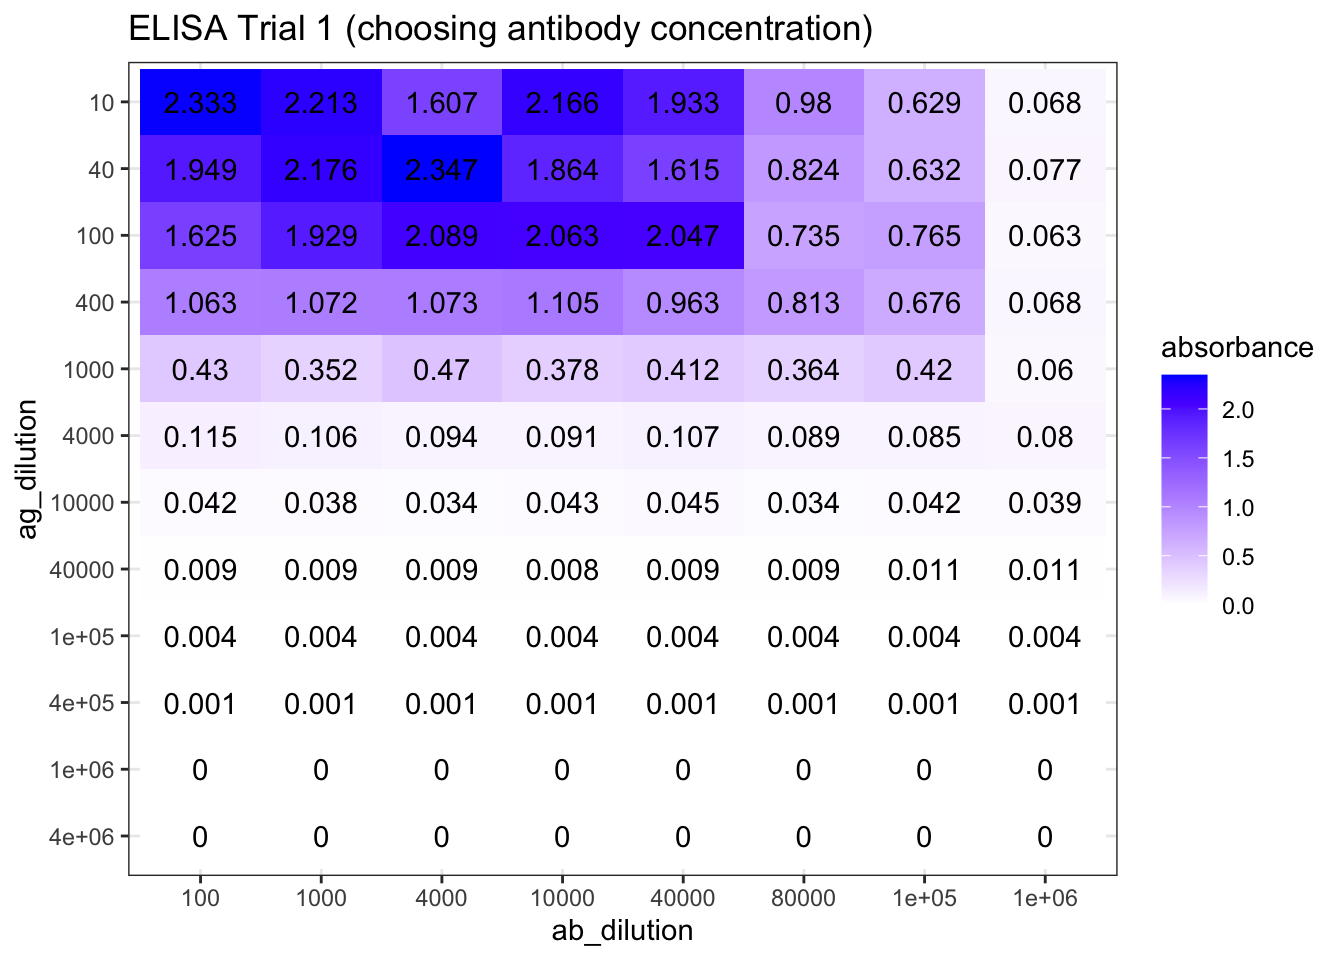 ELISA Trial 1 (choosing antibody concentration) results.